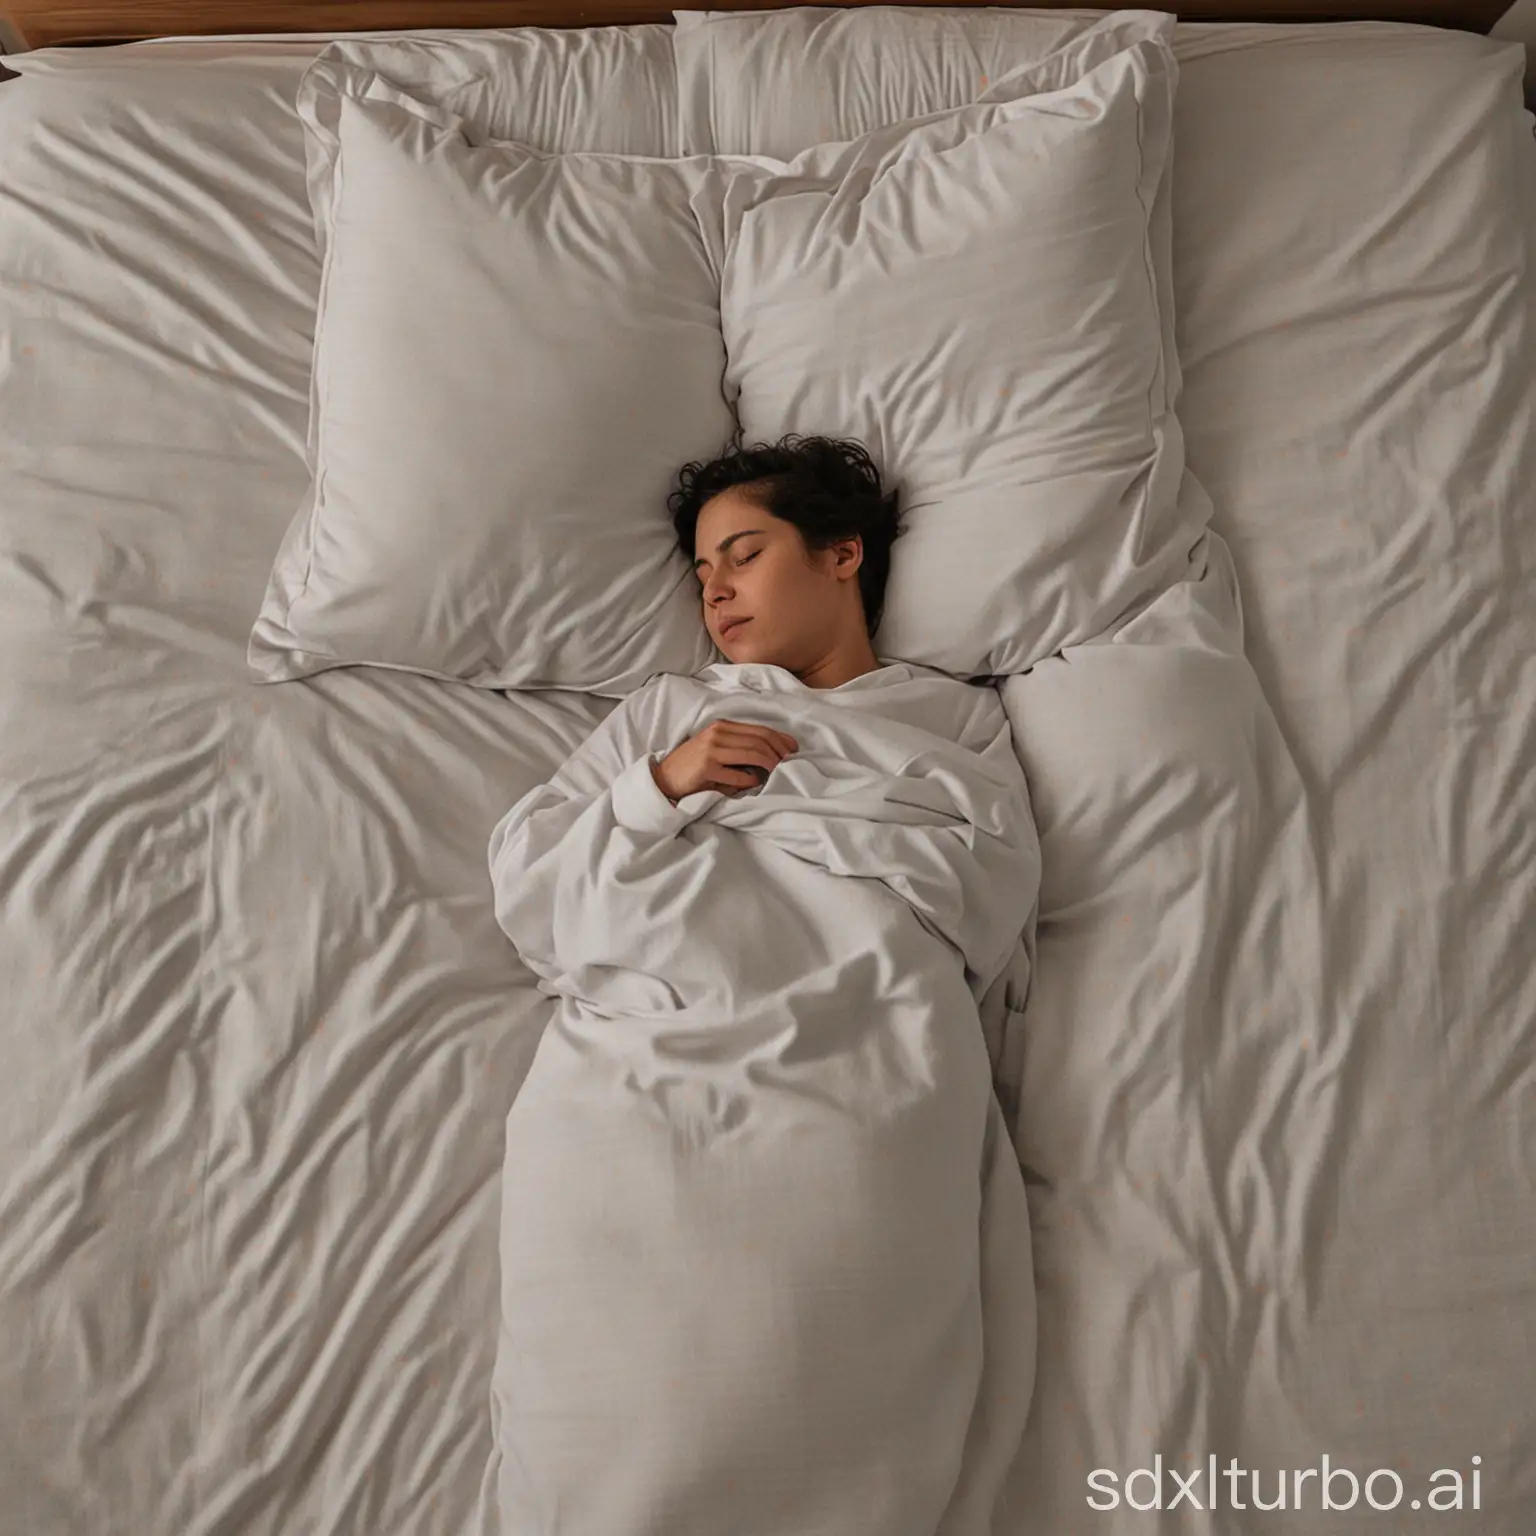 Peaceful-Sleep-in-Comfortable-Bed